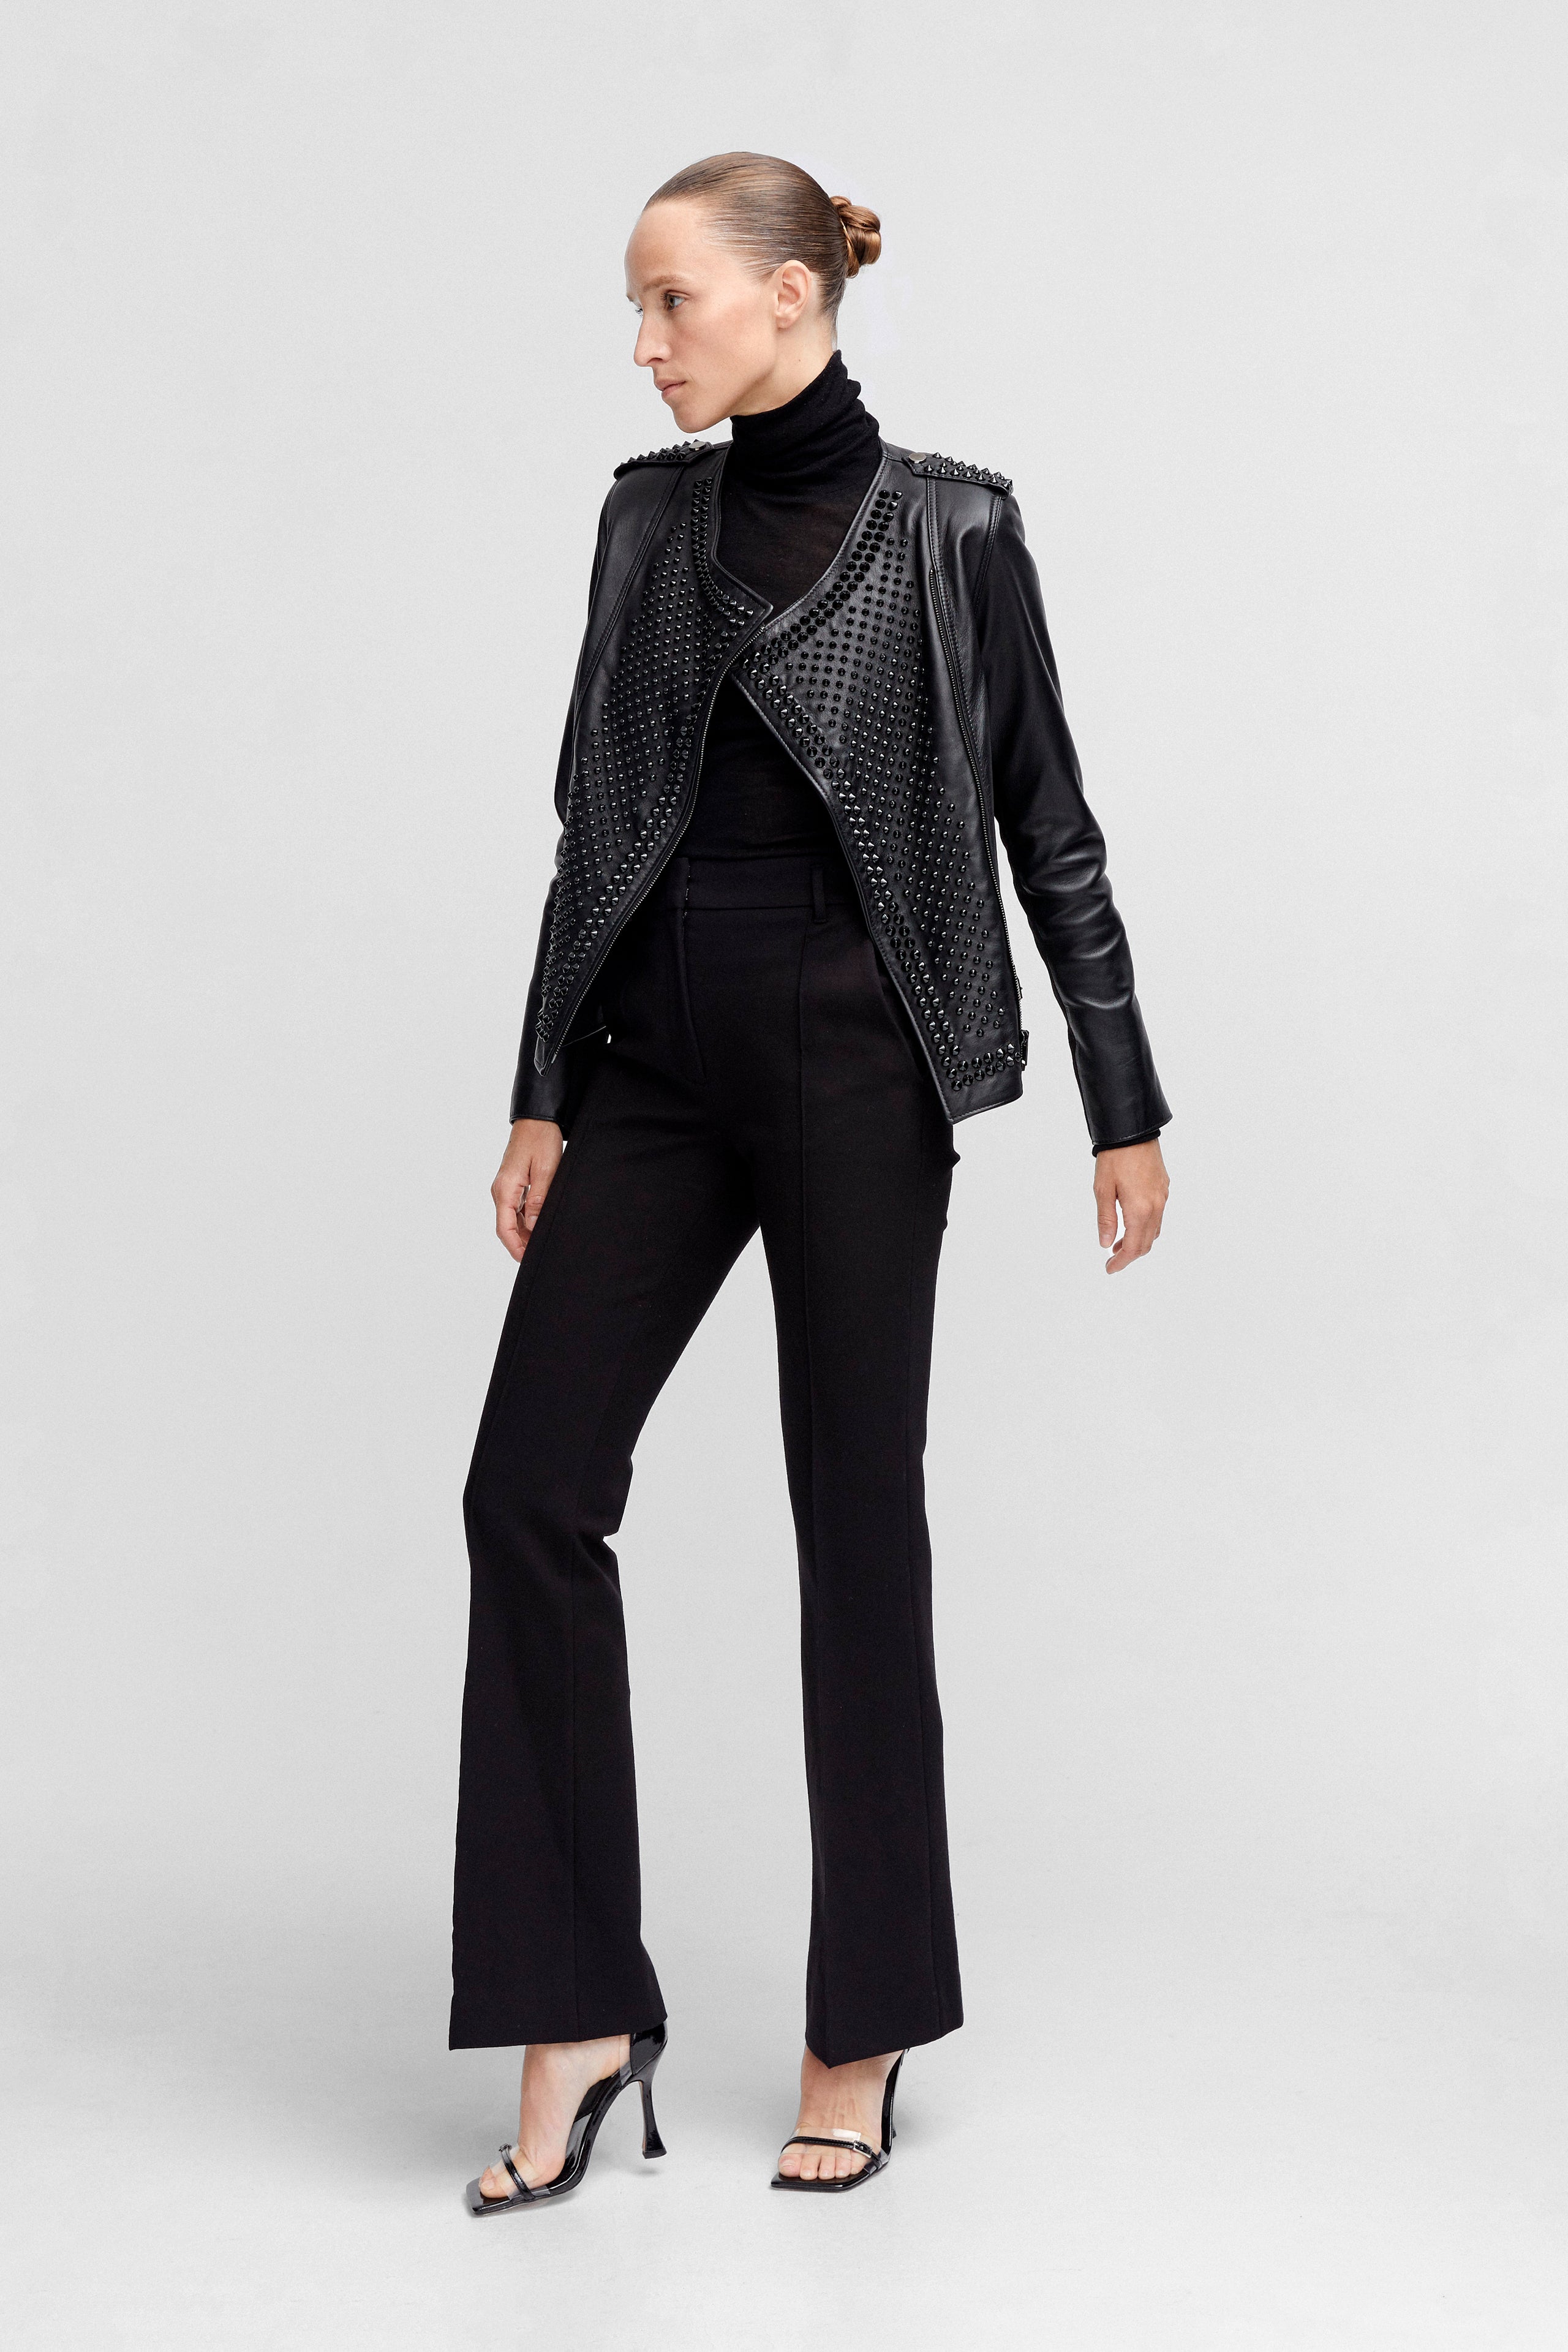 Model is wearing the Erin Black Studded Leather Jacket Side